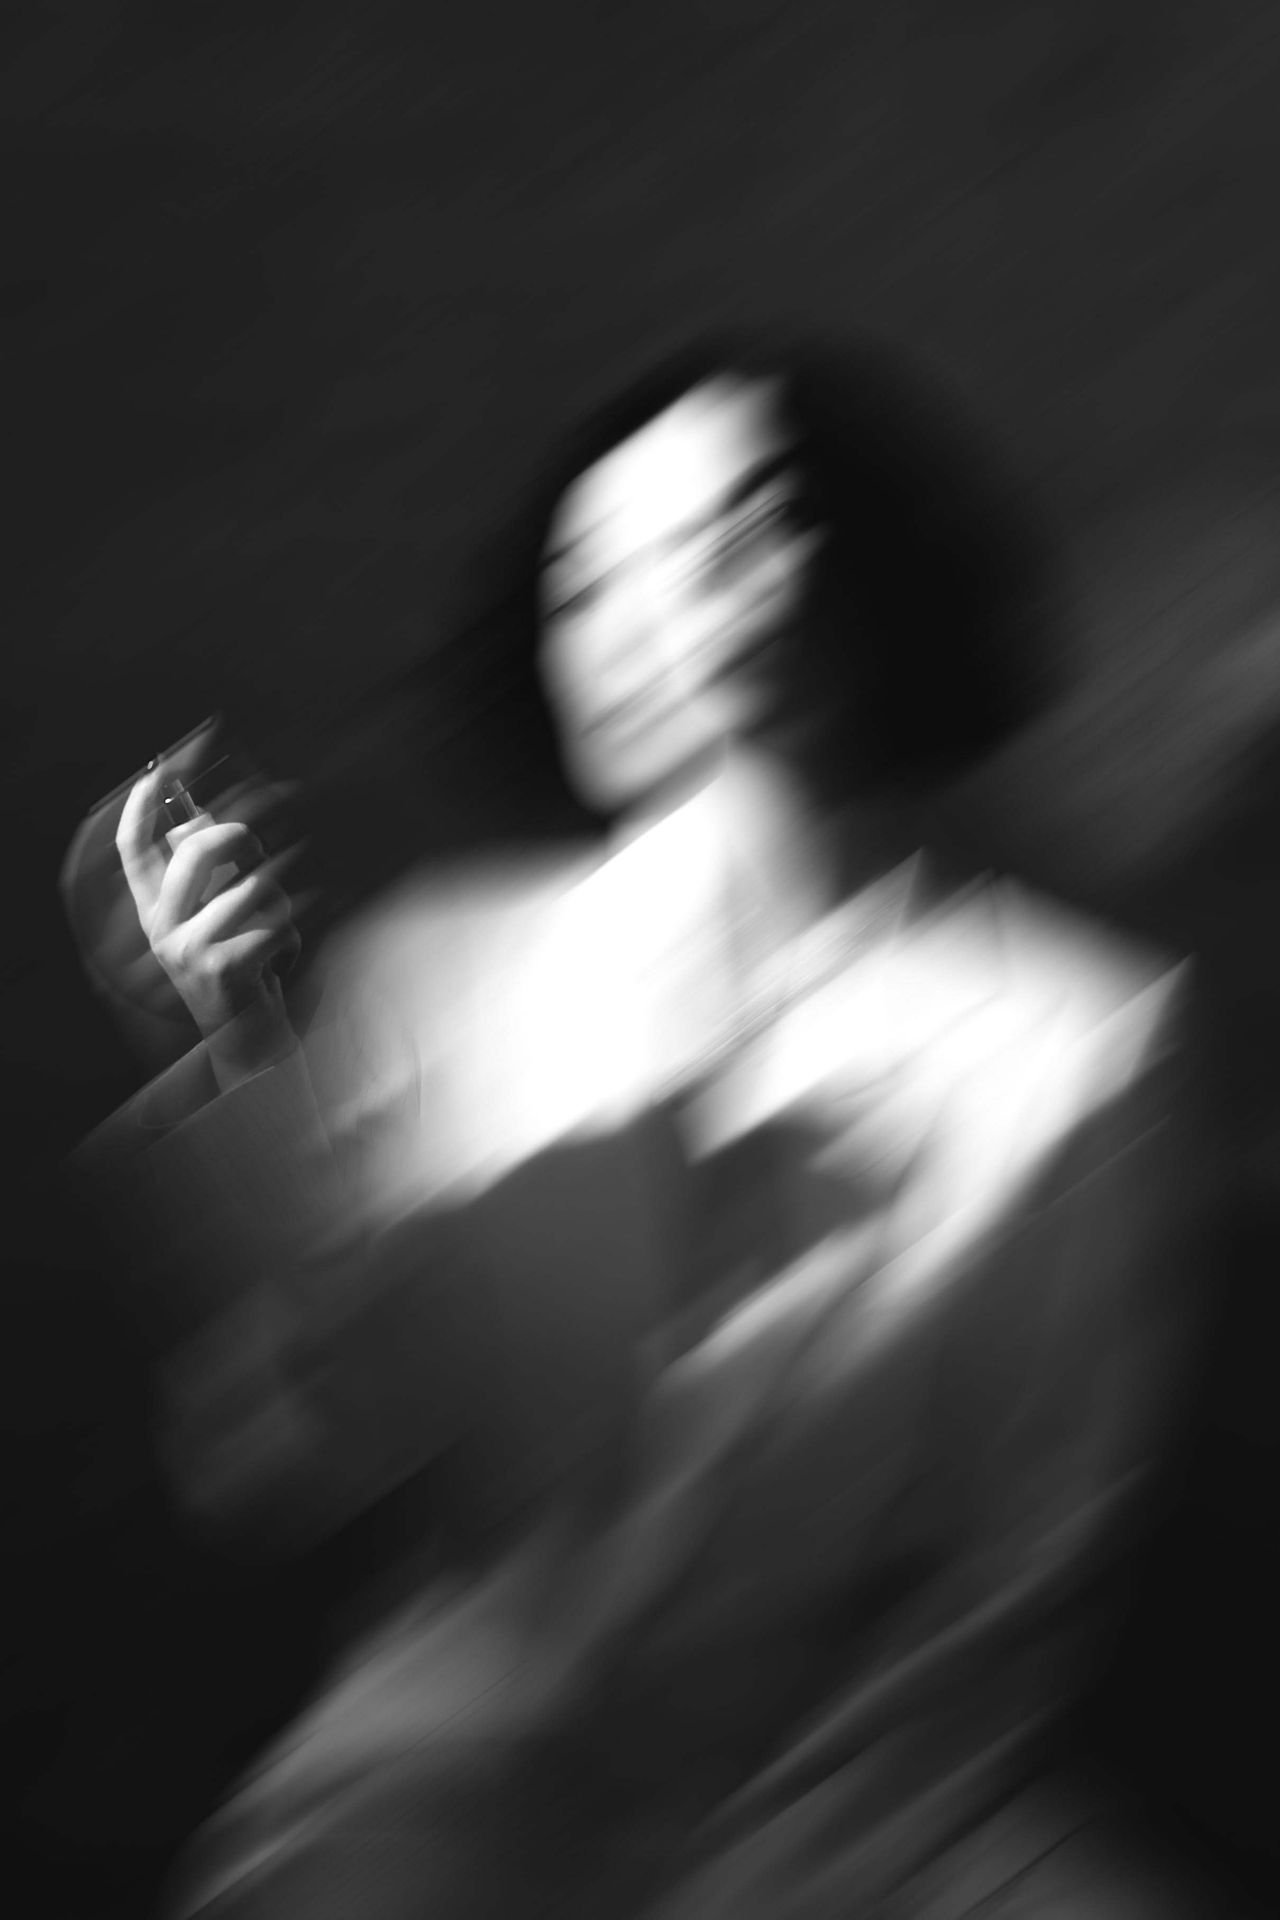 blurred image of woman spraying perfume